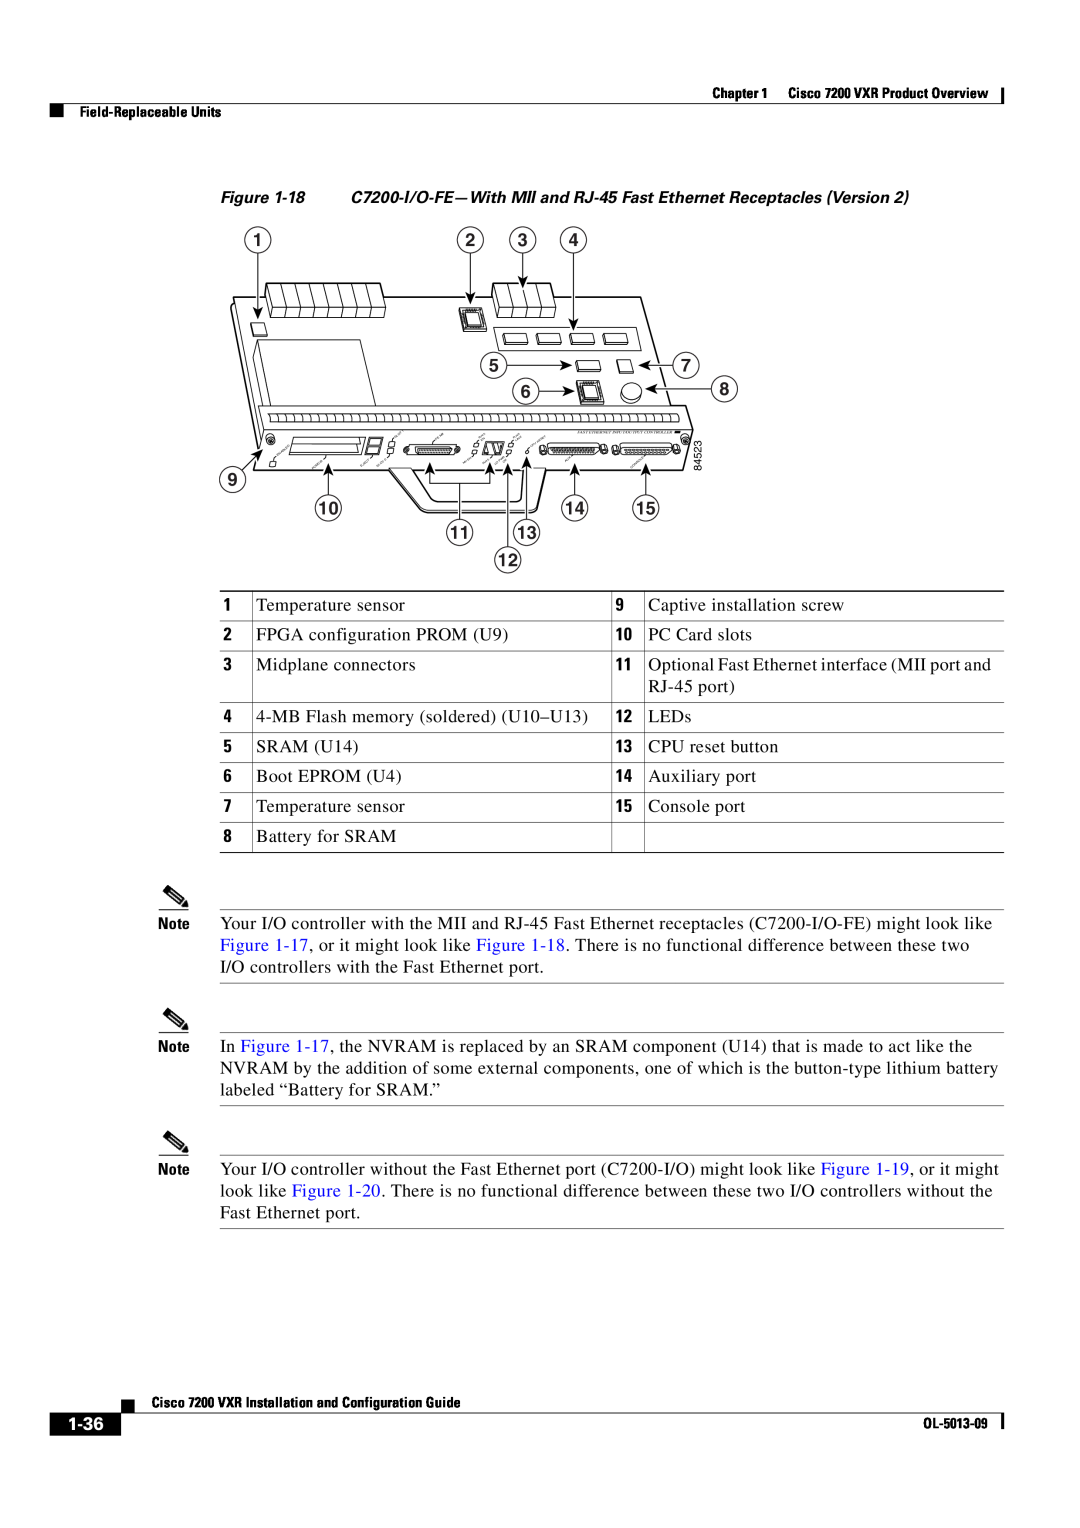 Cisco Systems 7200 VXR manual 1-36 